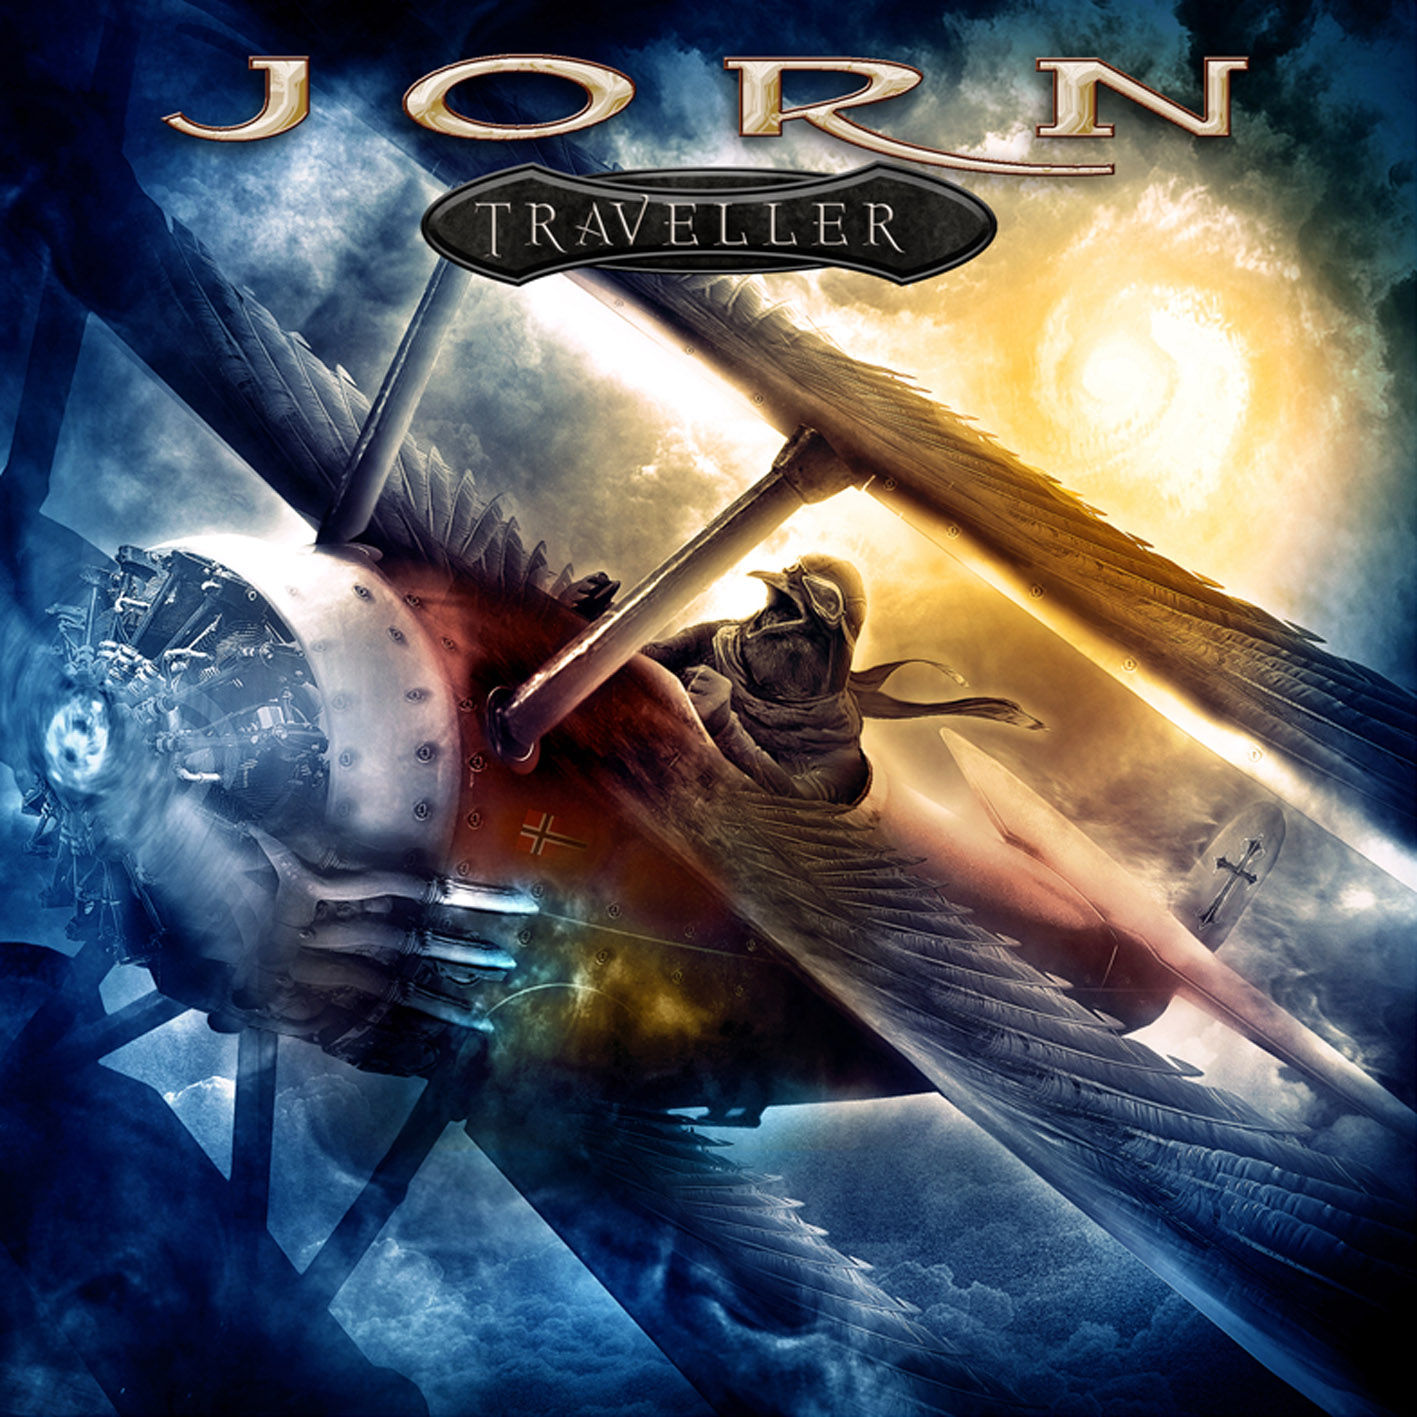 Traveller – Jorn